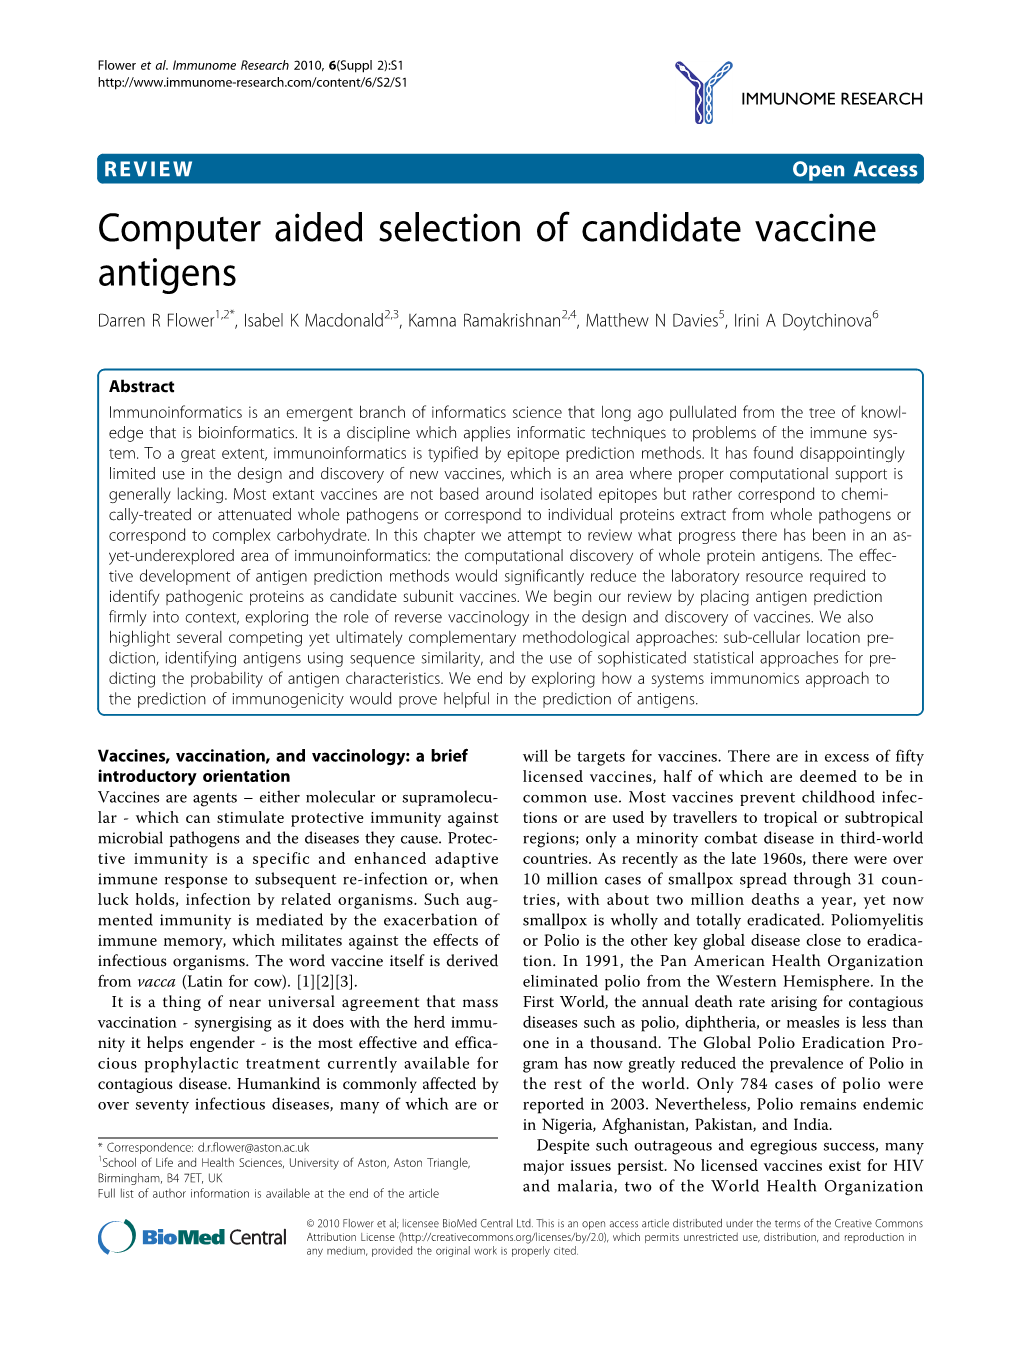 Computer Aided Selection of Candidate Vaccine Antigens Darren R Flower1,2*, Isabel K Macdonald2,3, Kamna Ramakrishnan2,4, Matthew N Davies5, Irini a Doytchinova6